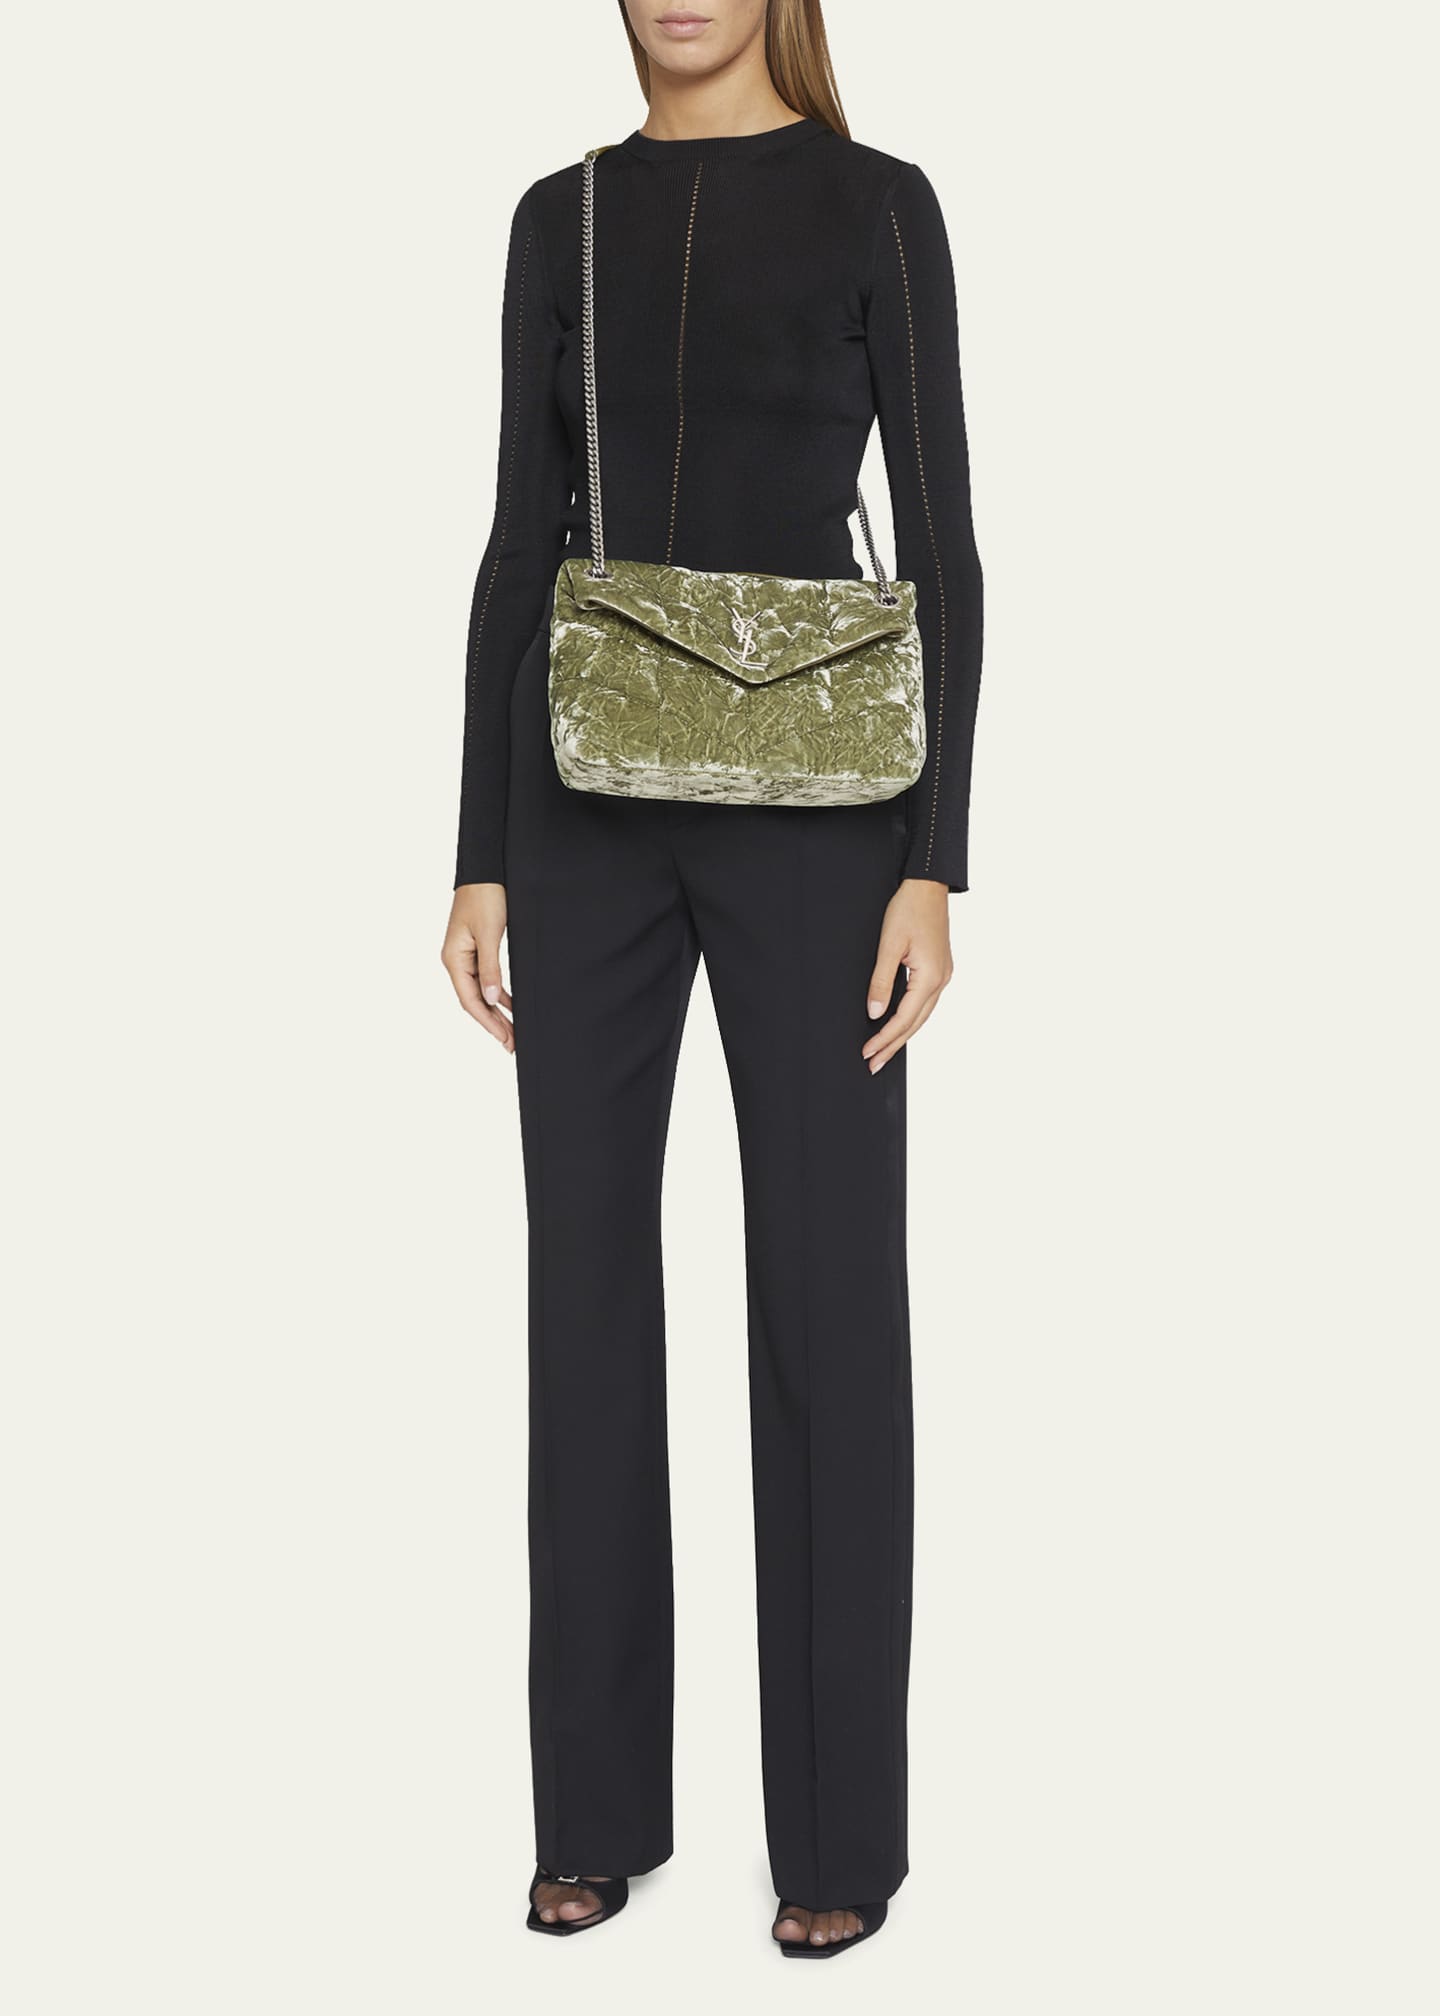 Saint Laurent Loulou Small YSL Puffer Velvet Chain Shoulder Bag - Bergdorf  Goodman